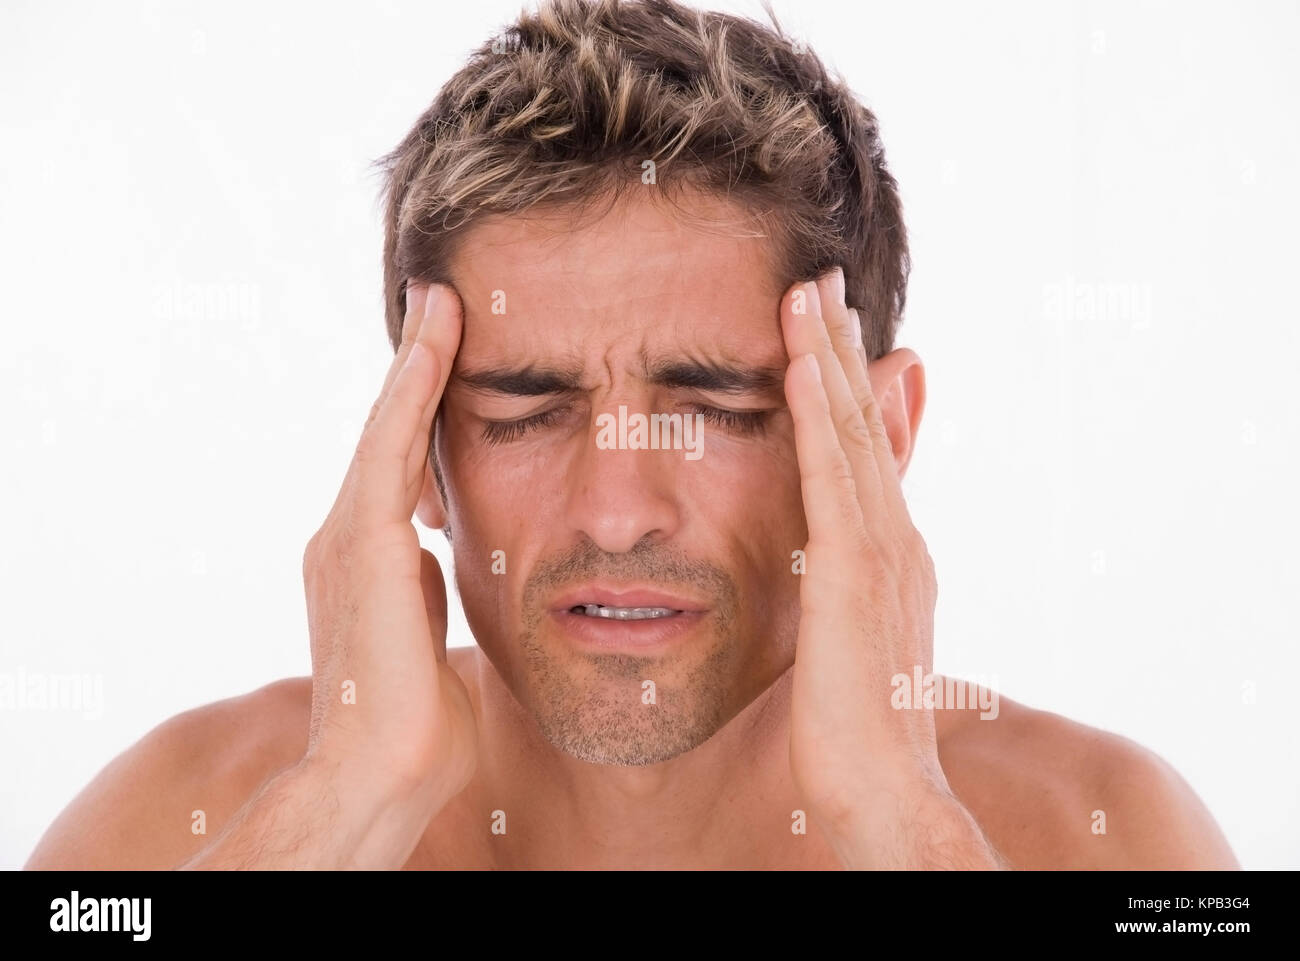 Model release, Mann, 35+, mit Kopfschmerzen - man with headache Stock Photo